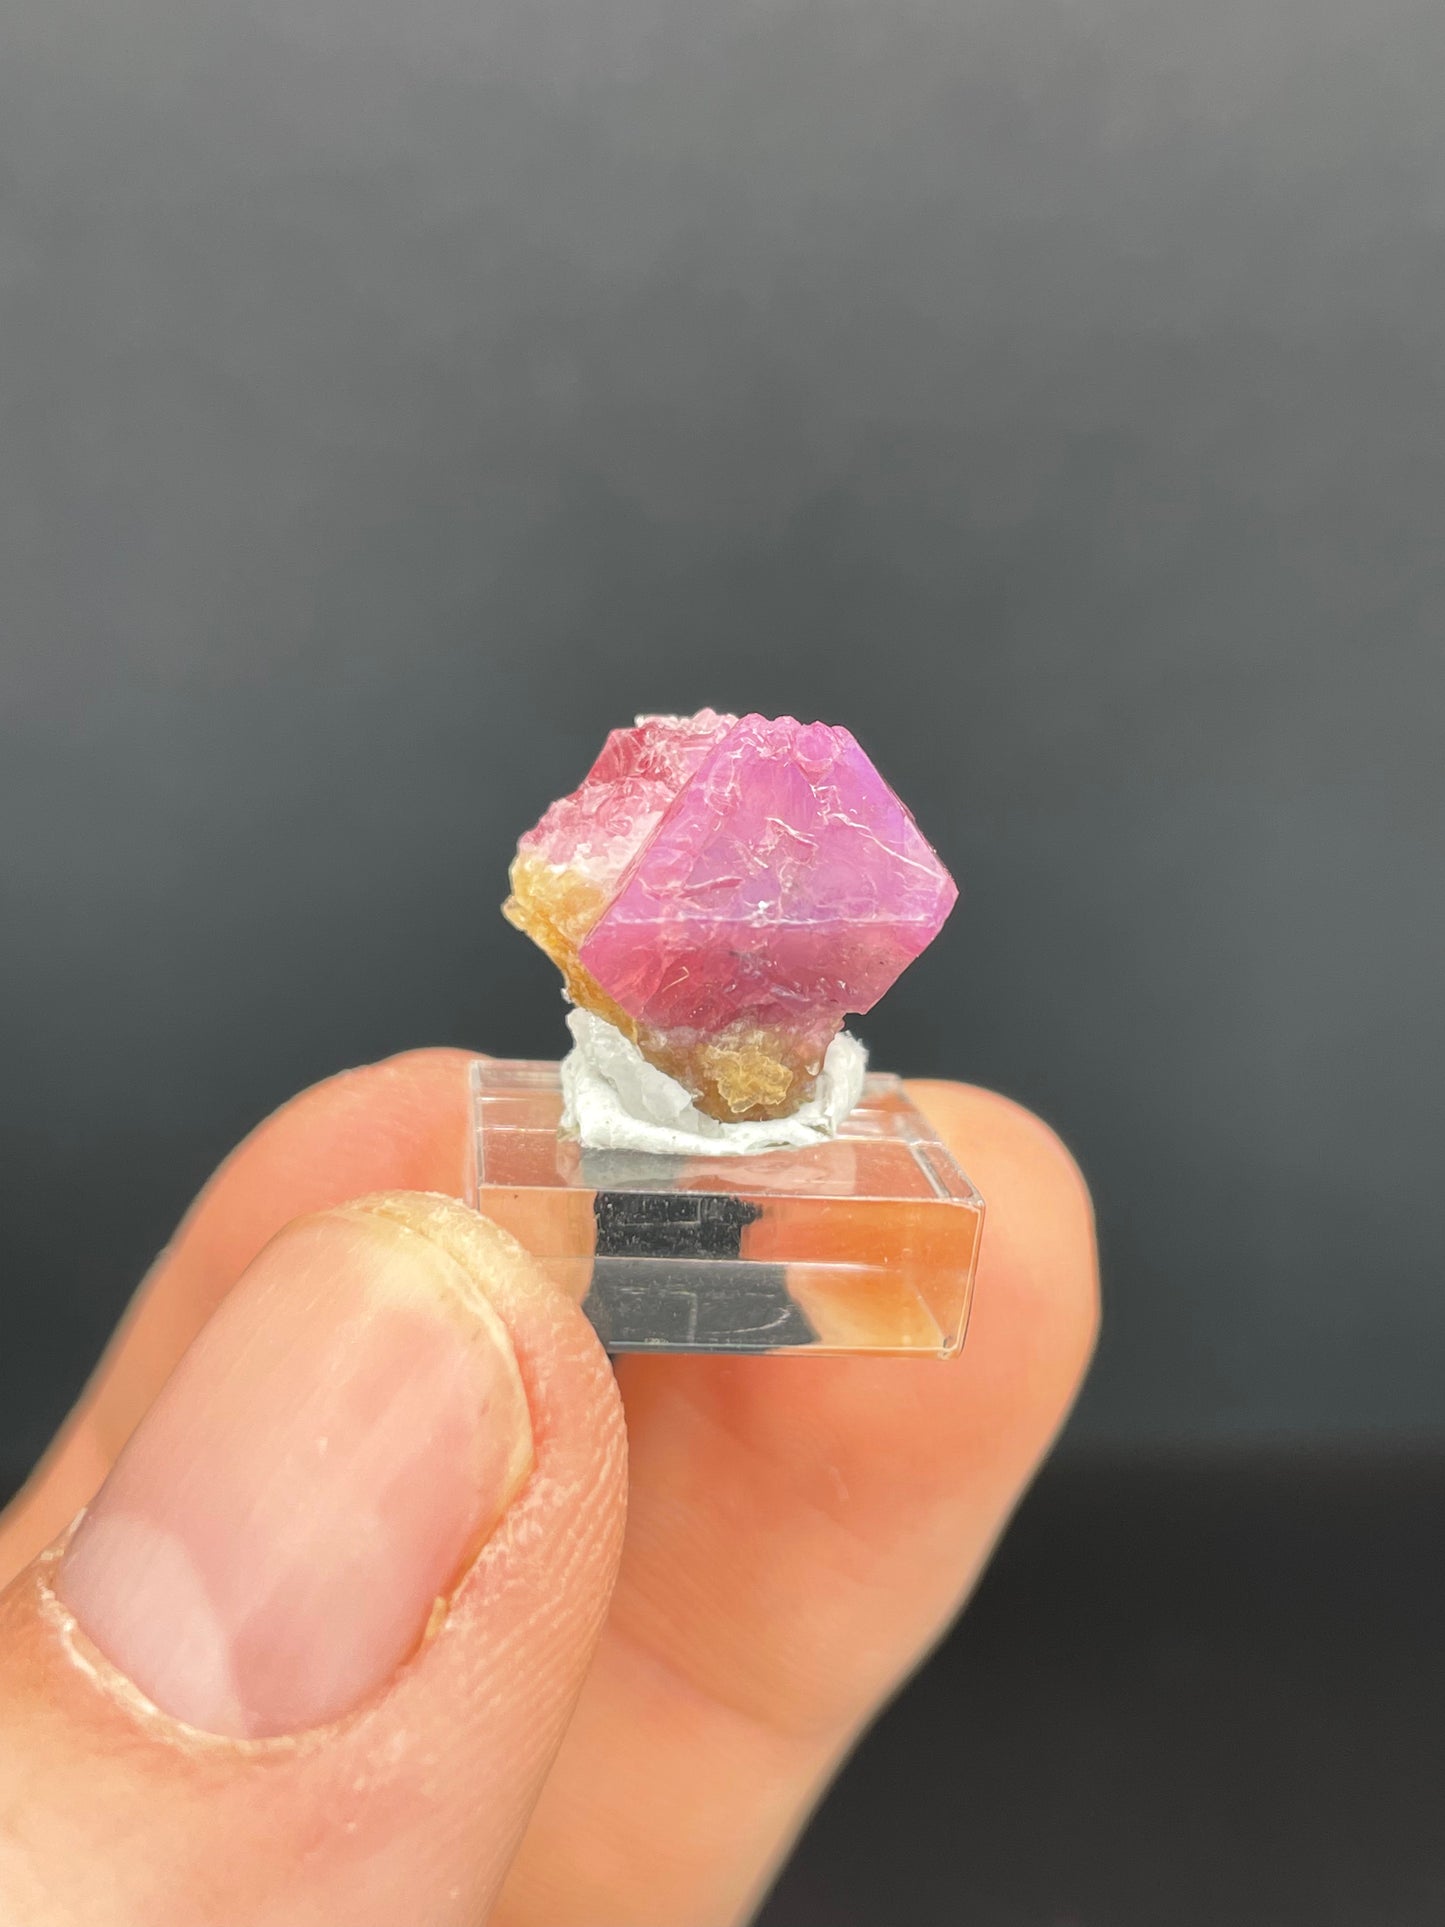 Spinel Crystal, Tanzania